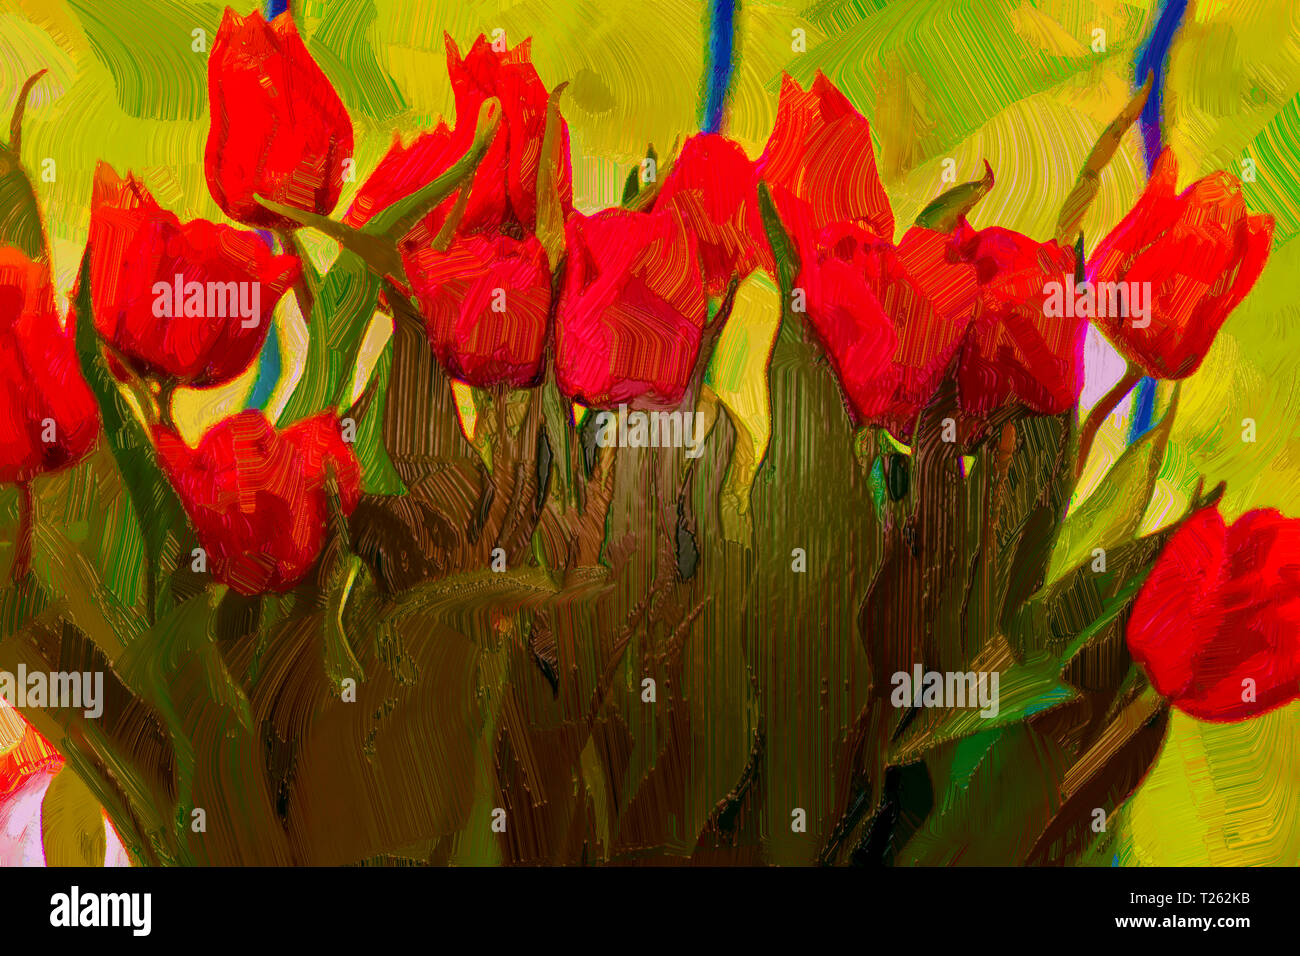 Concept Digital oilpainting : Tulips fot love Stock Photo